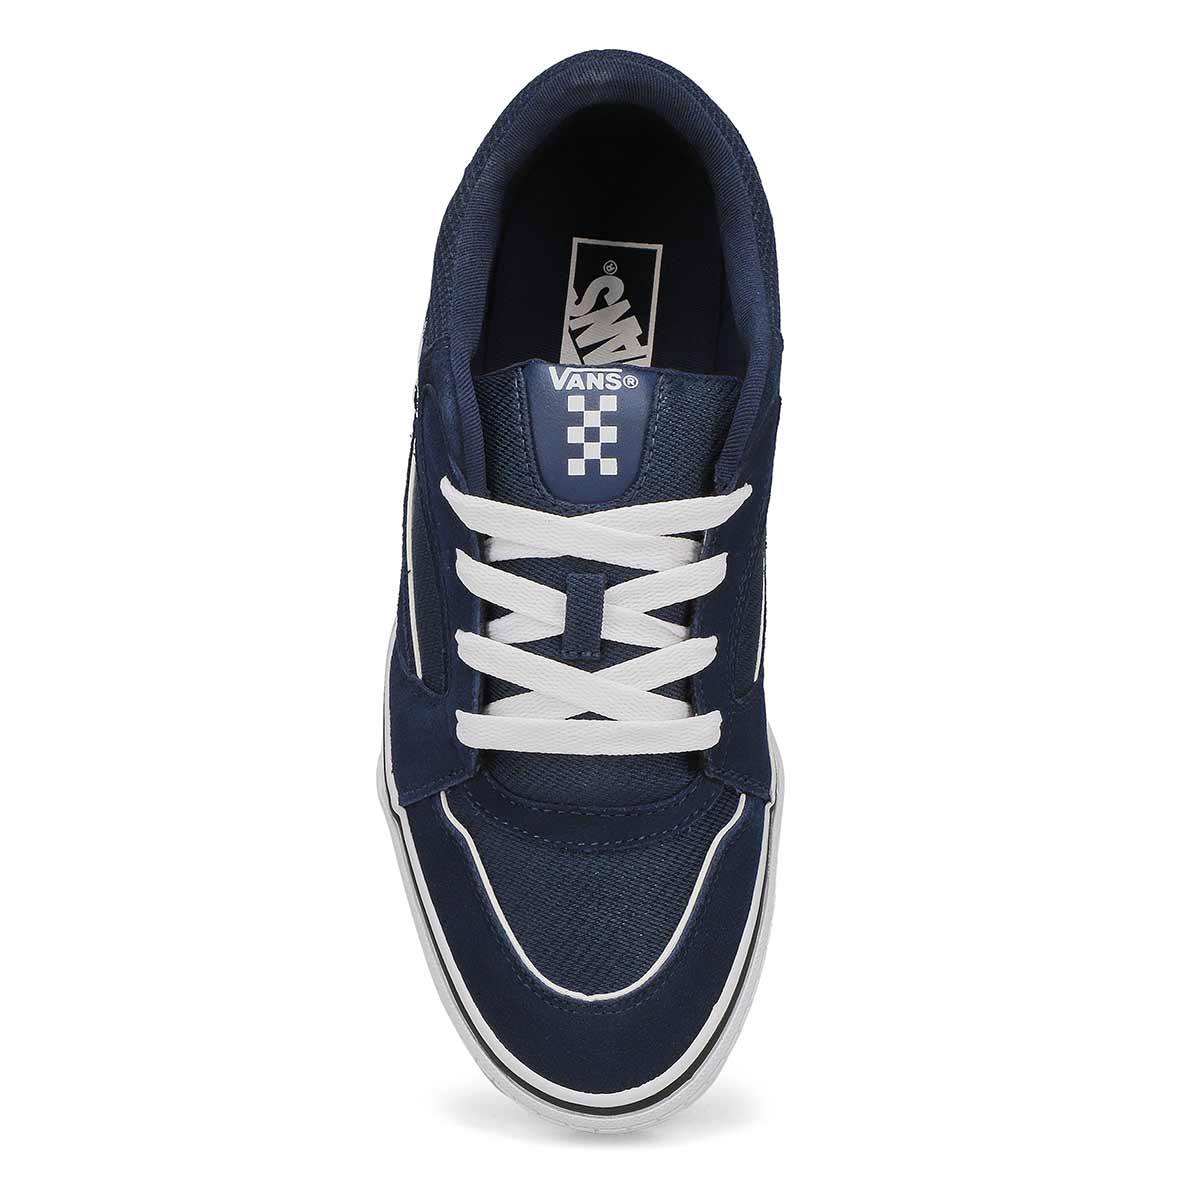 Men's Colson Lace Up Sneaker - Blue/White